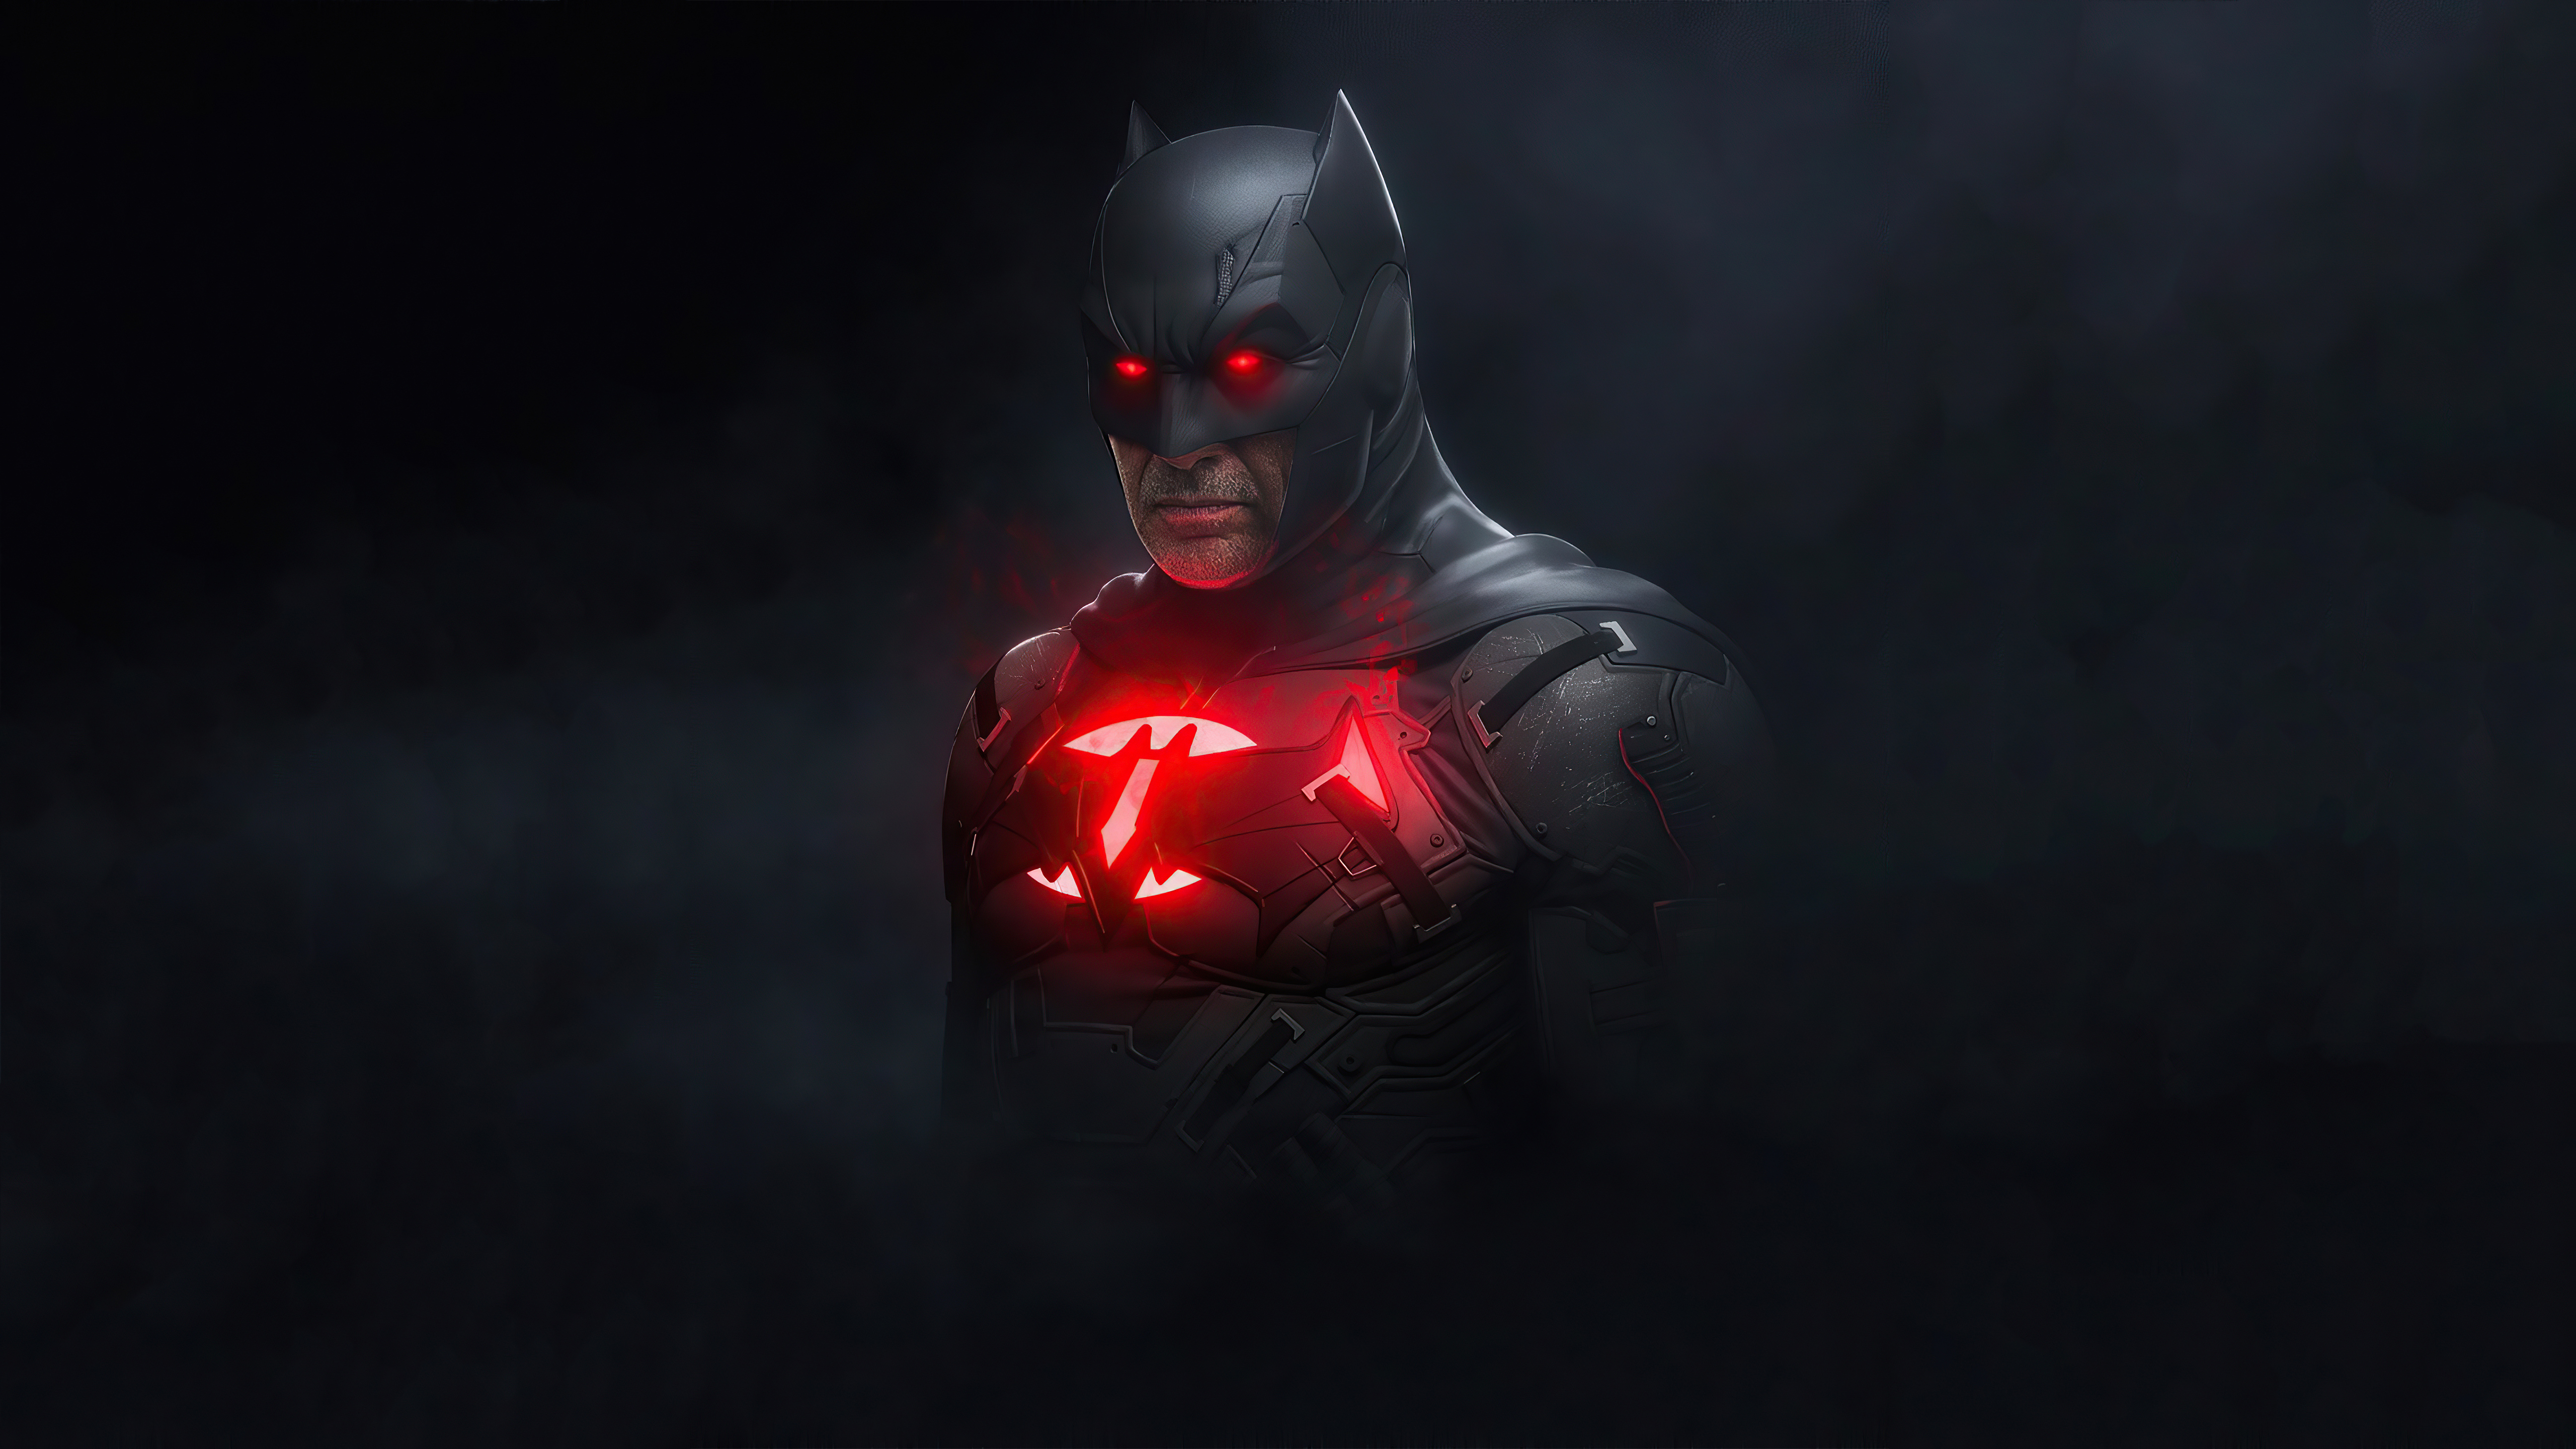 Batman Red 4k 2020 Art, HD Superheroes, 4k Wallpapers, Images